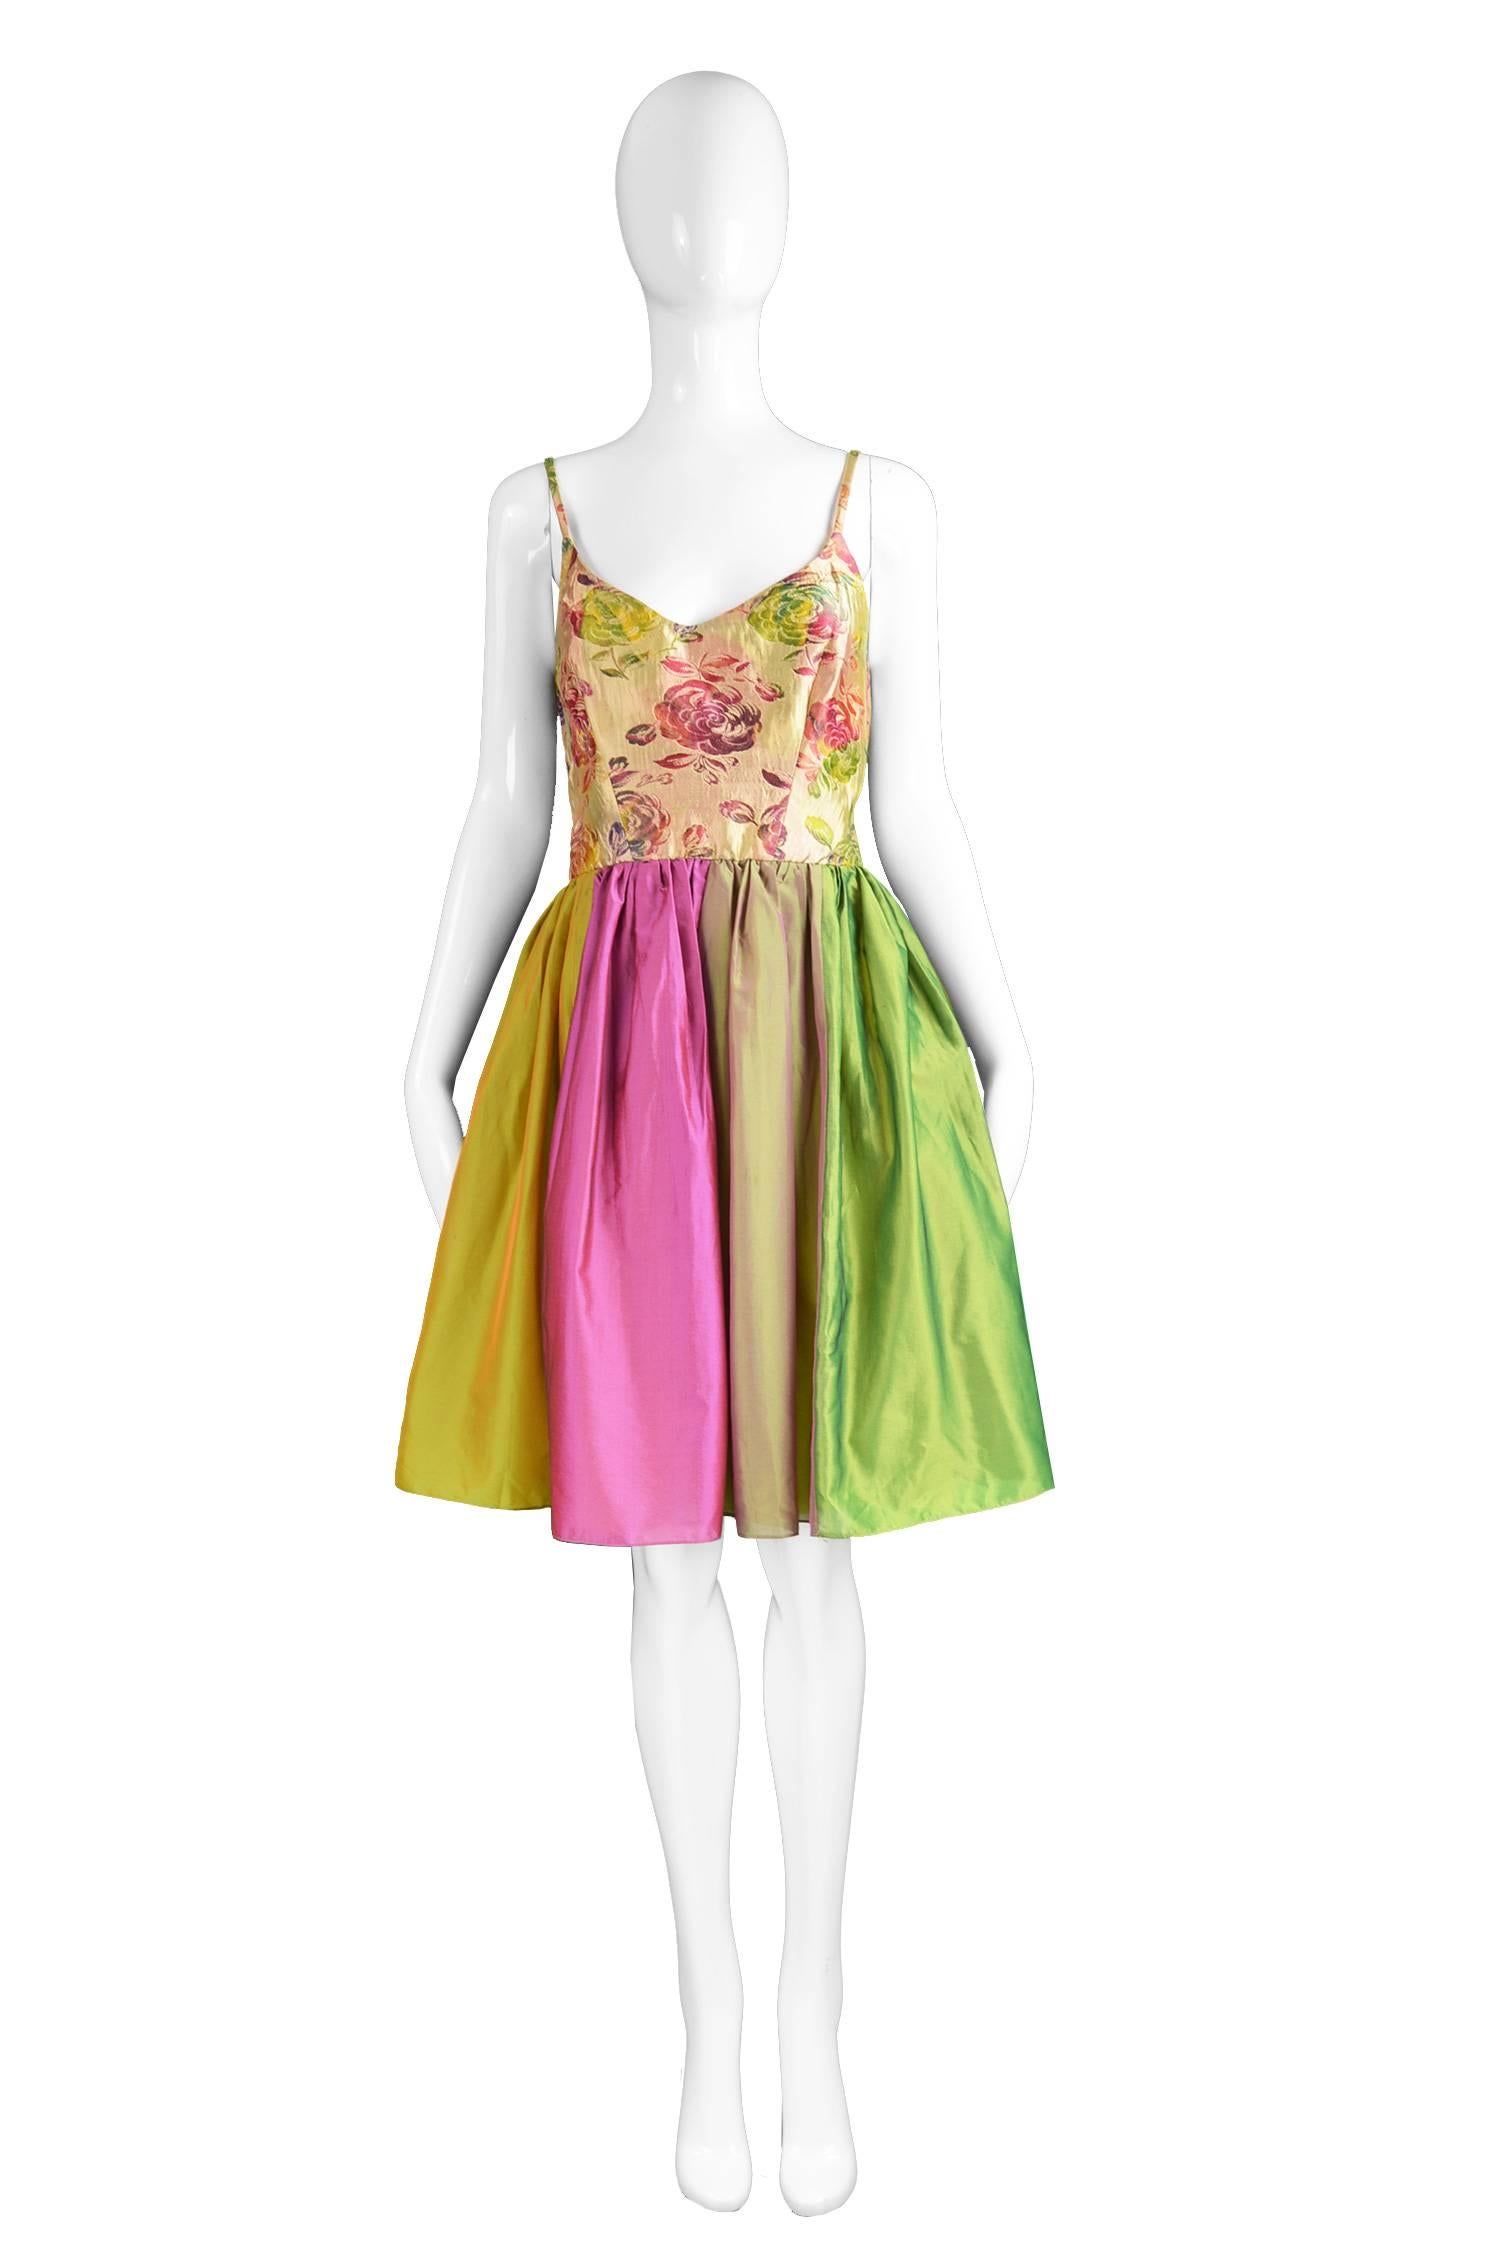 Ben de Lisi Vintage Floral Brocade & Iridescent Metallic Silk Dress, 1990s

Estimated Size: UK 12 / US 8/ EU 40. Please check measurements. 
Bust - 36” / 91cm
Waist - 30” / 76cm
Hips - Free
Length (Bust to Hem) - 29” / 73cm

A beautiful vintage